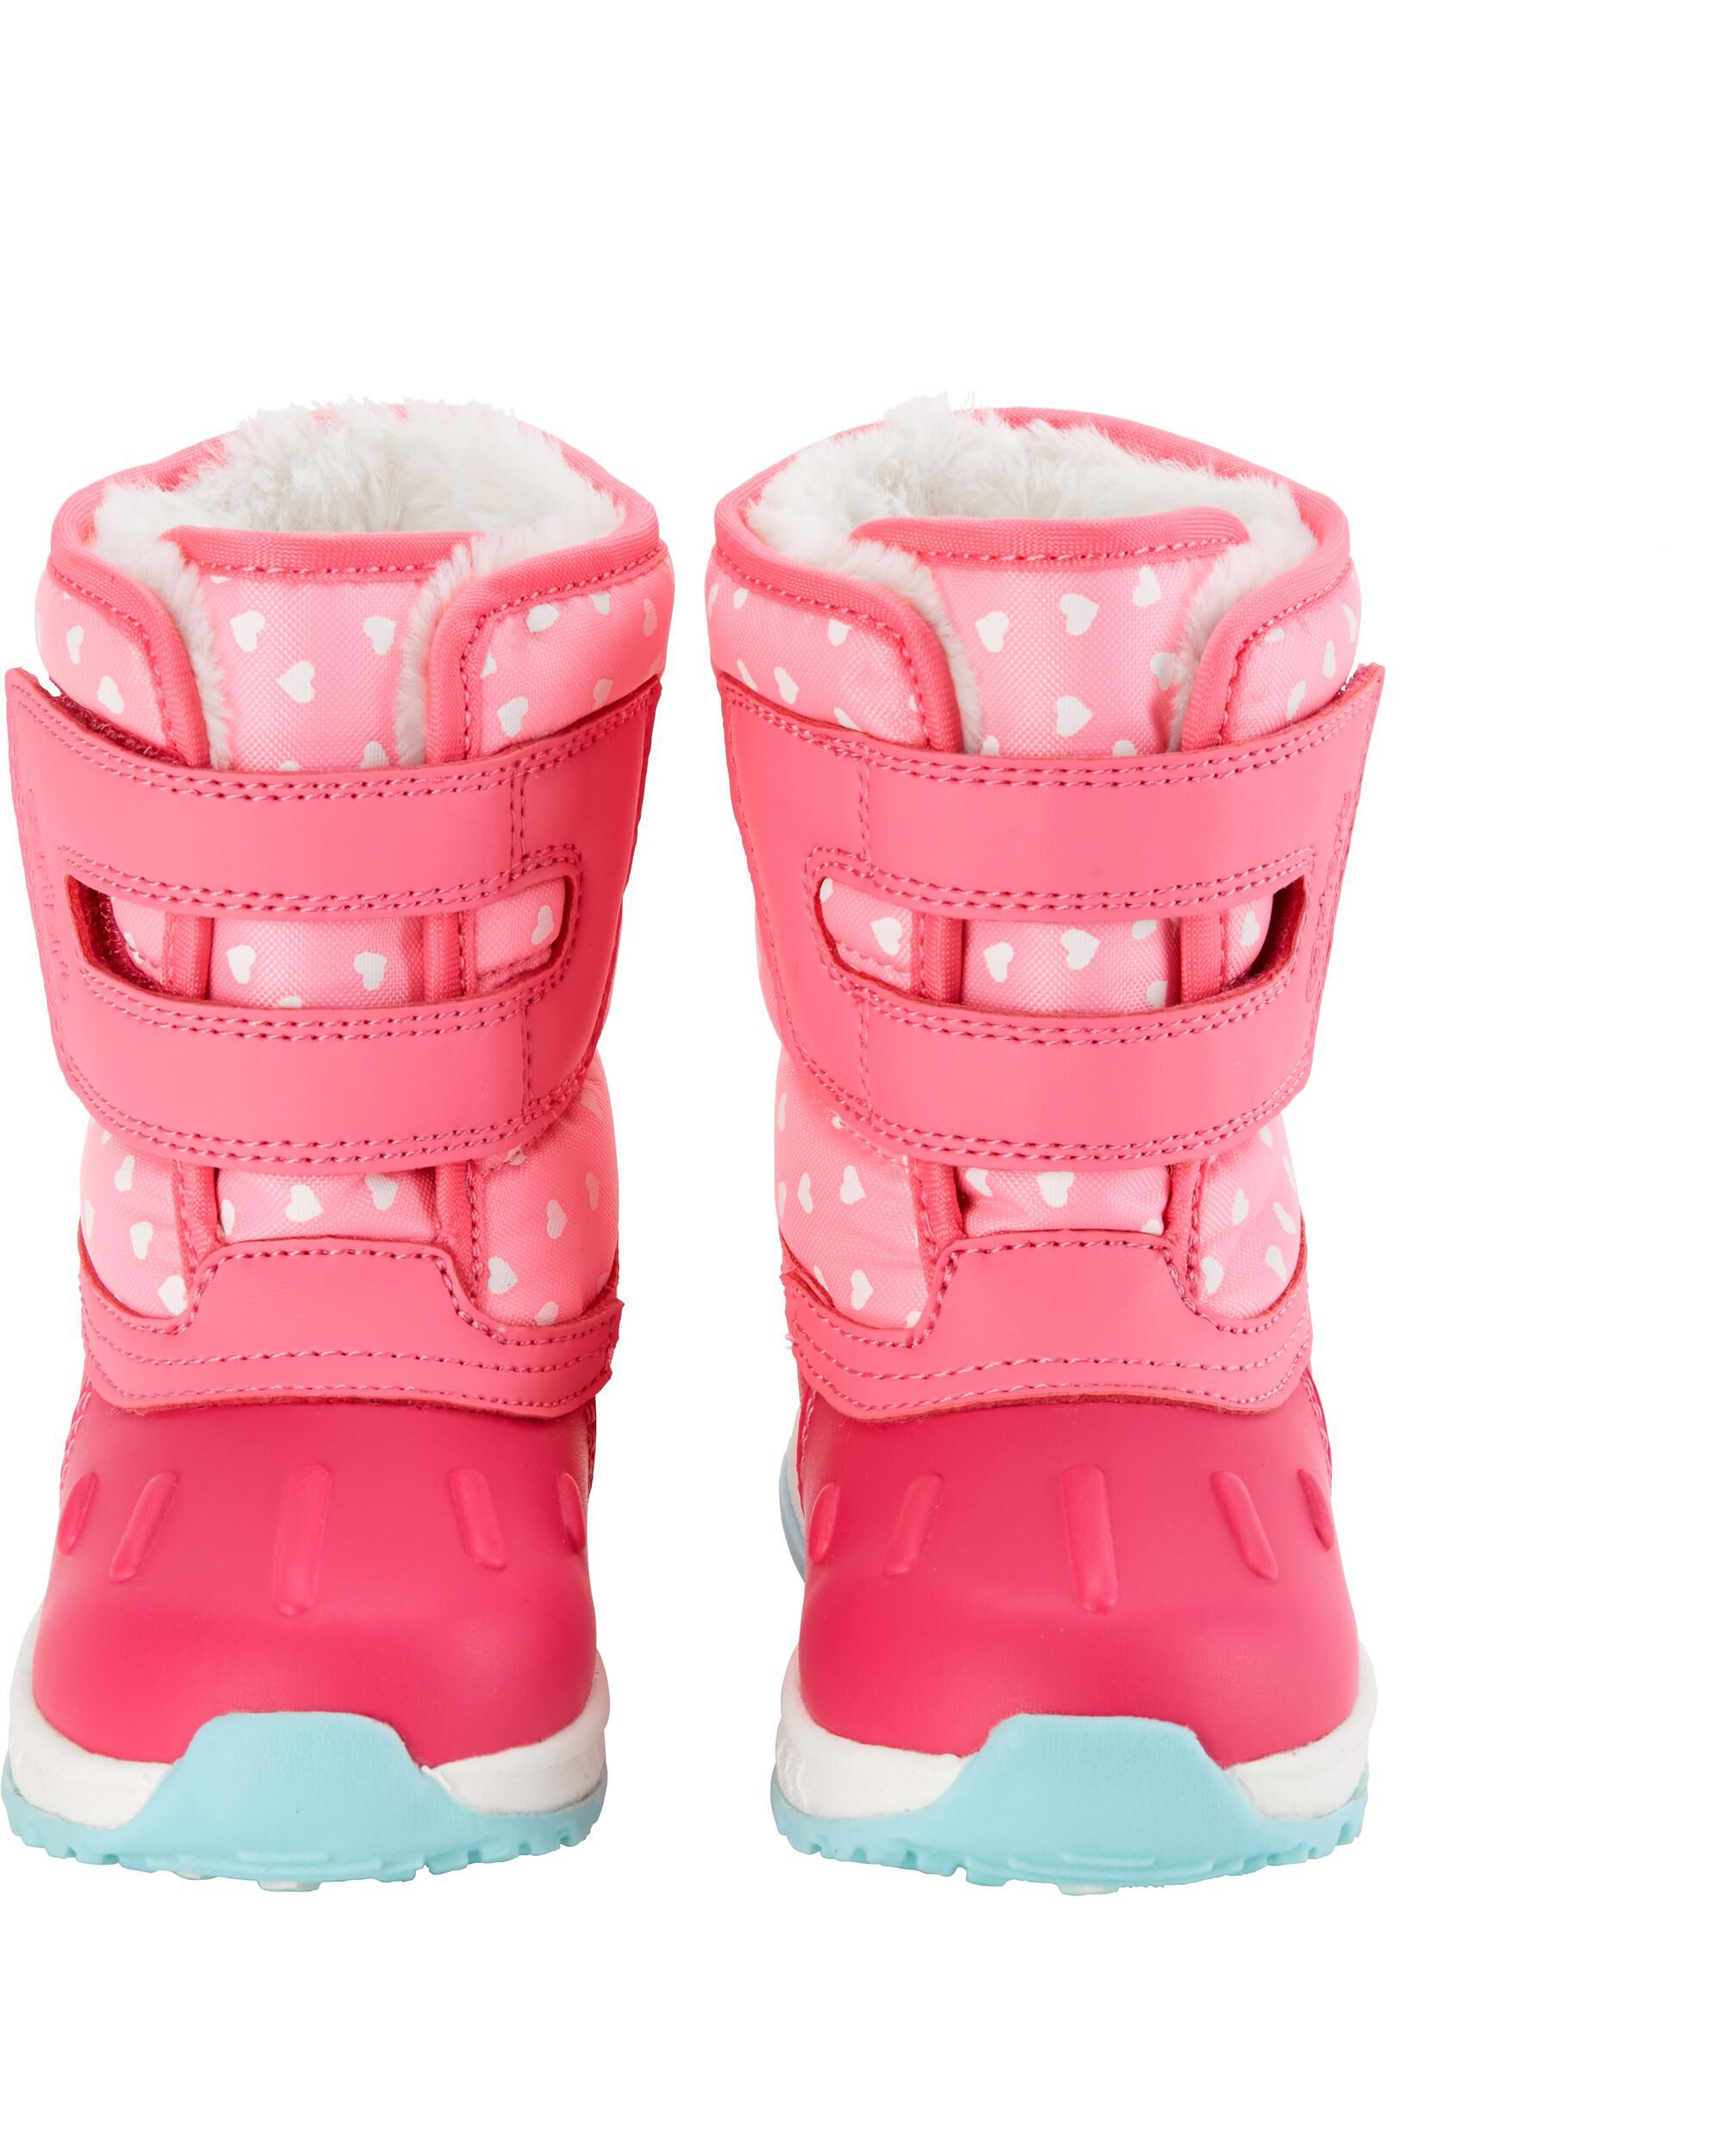 Carter's Heart Snow Boots | oshkosh.com